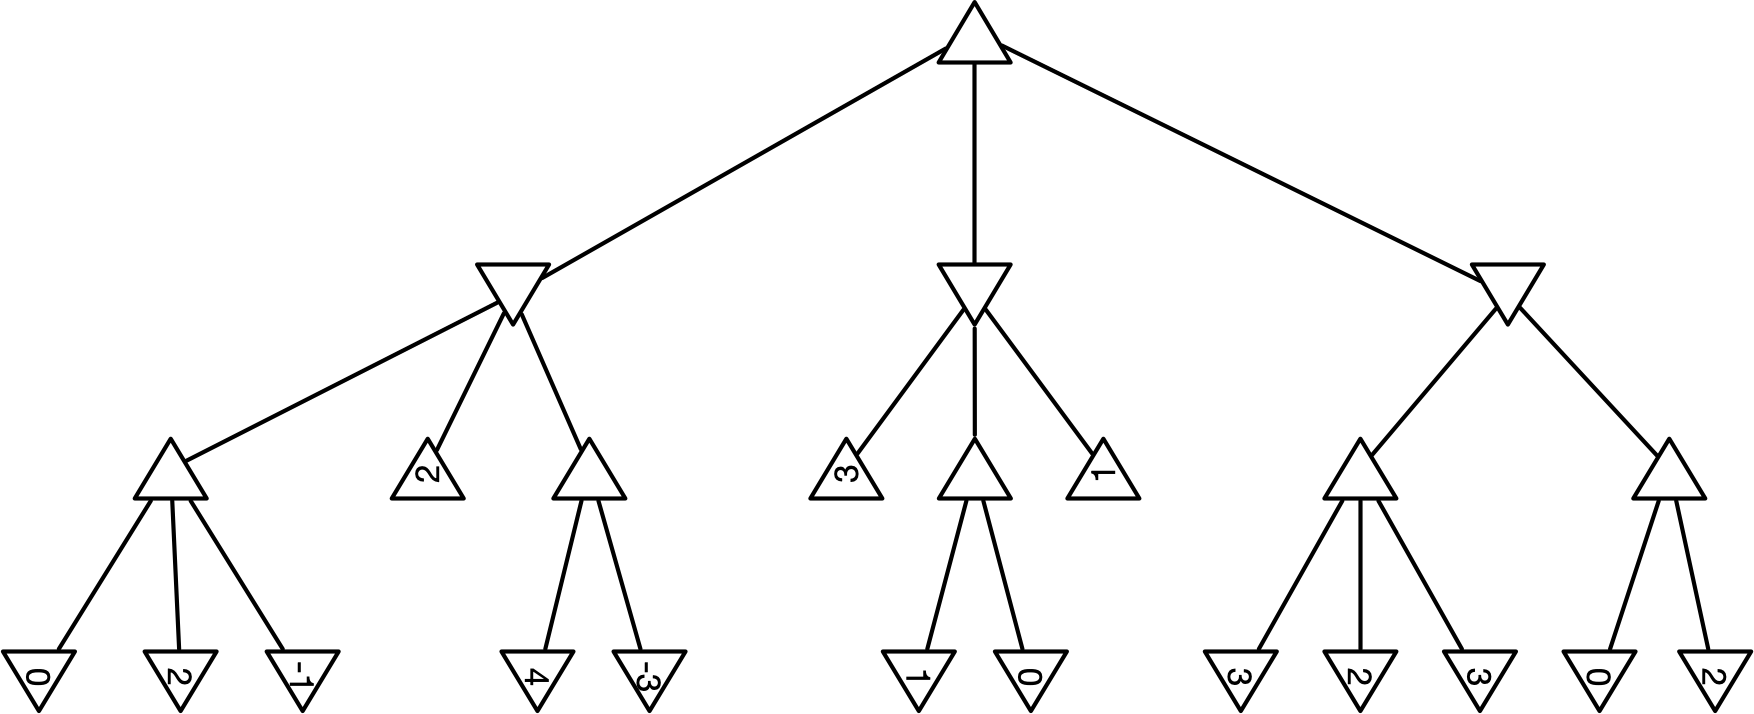 Alpha-beta pruning example tree